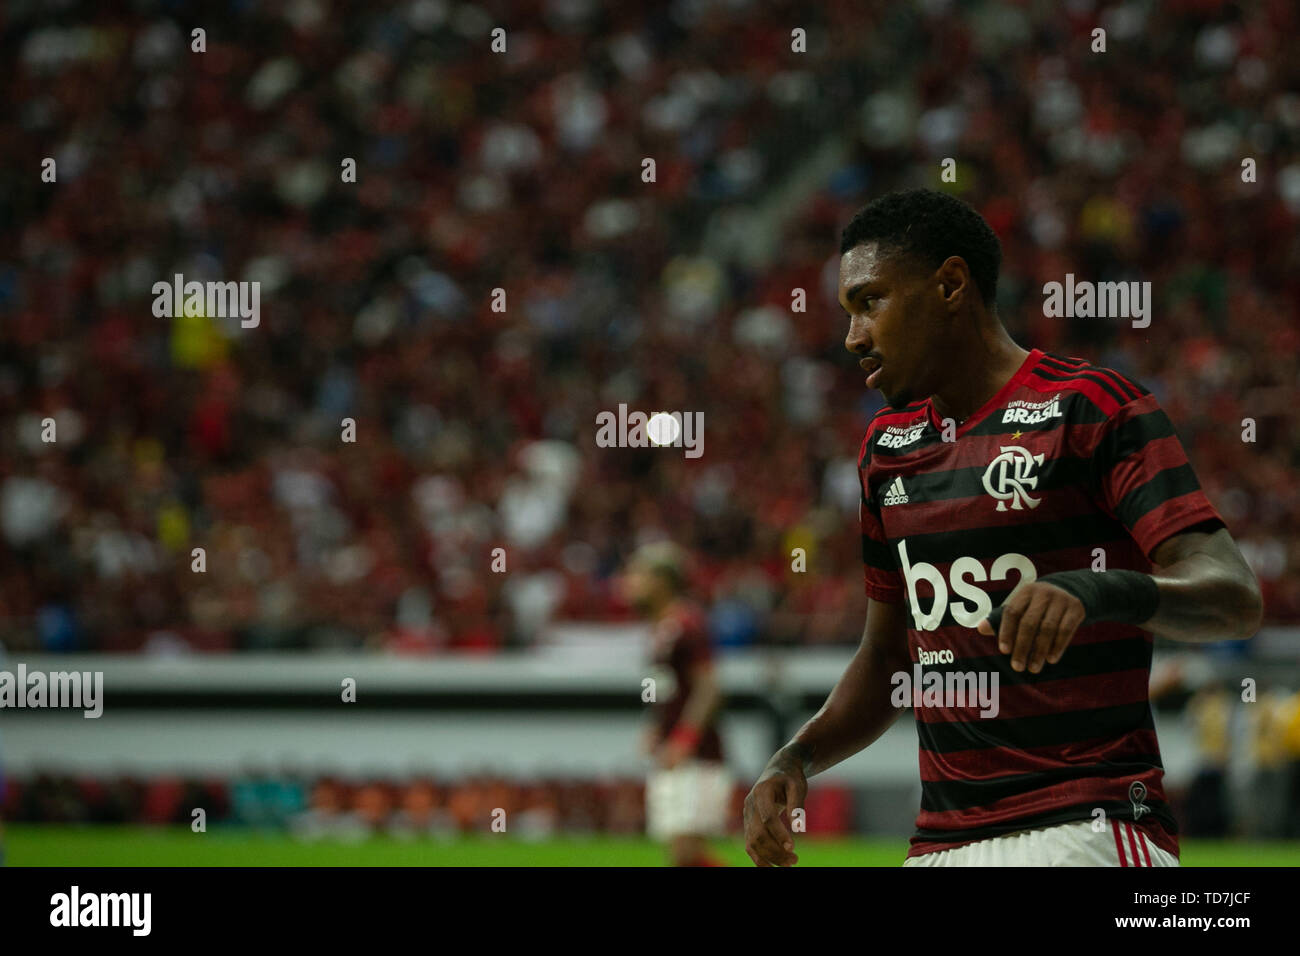 BRASÍLIA, DF - 12.06.2019: CSA X FLAMENGO - CSA faces Flamengo on Wednesday (12), for the 9th round of the Brasileirão - Série A at the Mané Garrincha Stadium in Brasilia. Featured player Vitinho. (Photo: Myke Sena/Fotoarena) Stock Photo